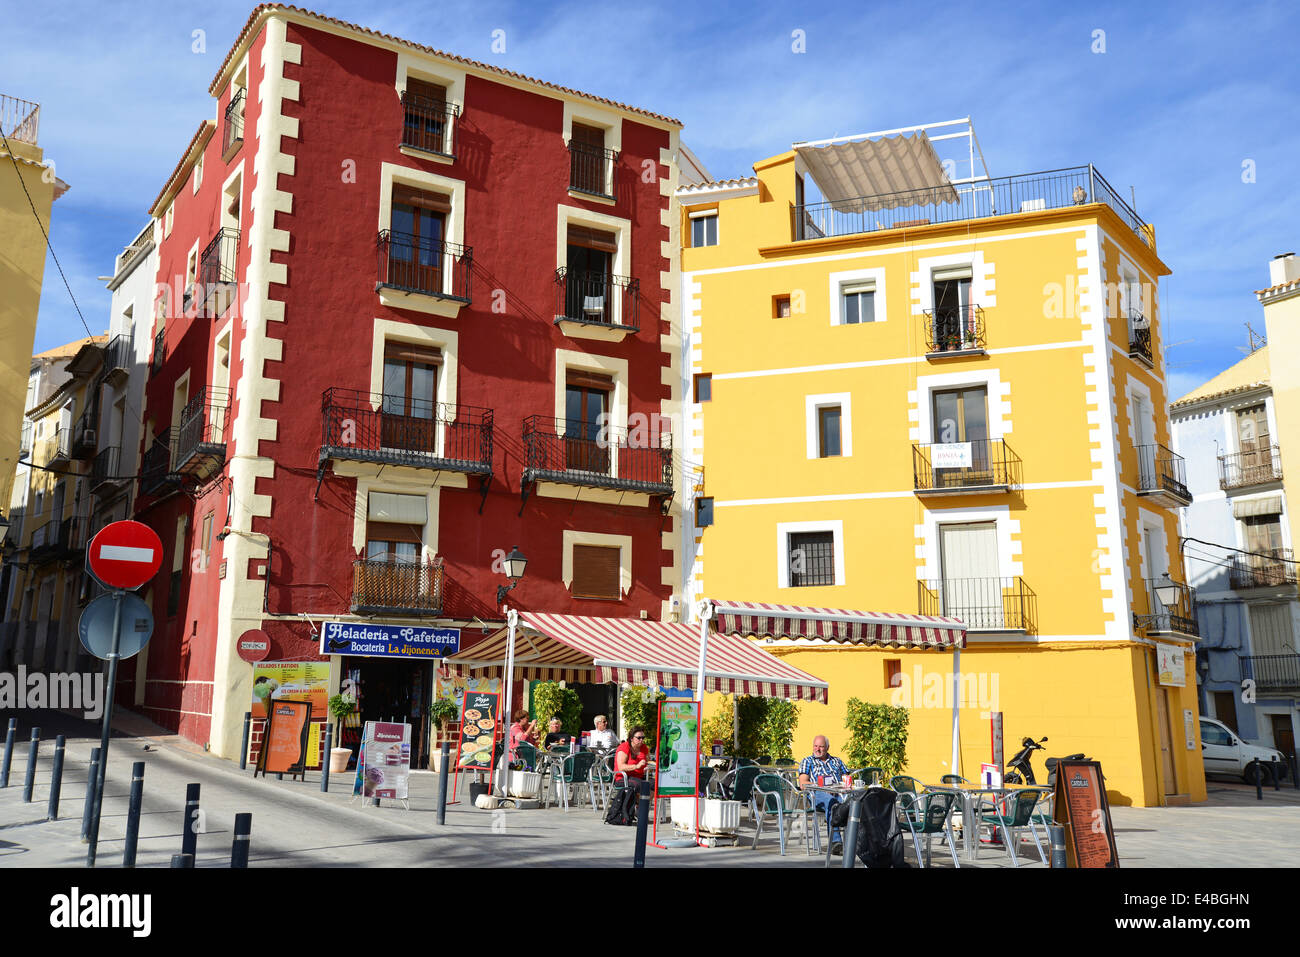 Seafront restaurant, Villajoyosa (La Vila Joiosa), Costa Blanca, Alicante Province, Kingdom of Spain Stock Photo